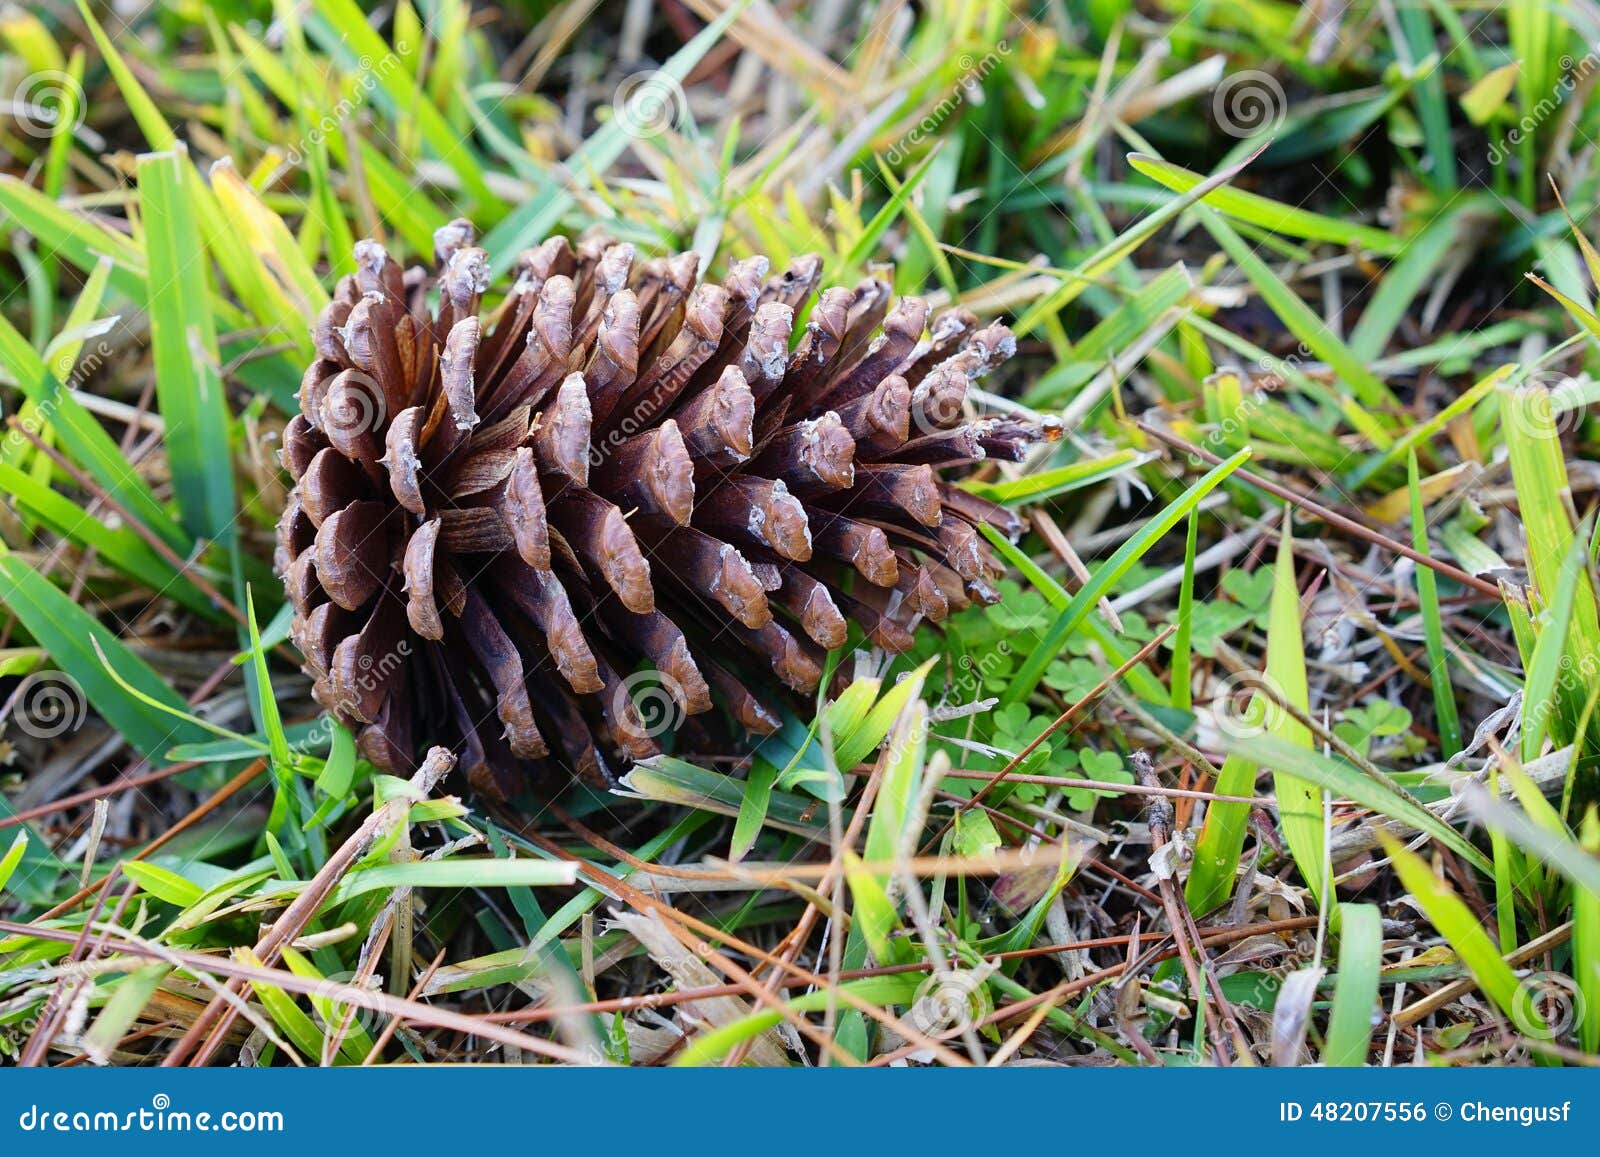 Pinecone. Cone of Pine. Fruit Nature. Stock Photo Image of land, grassland: 48207556